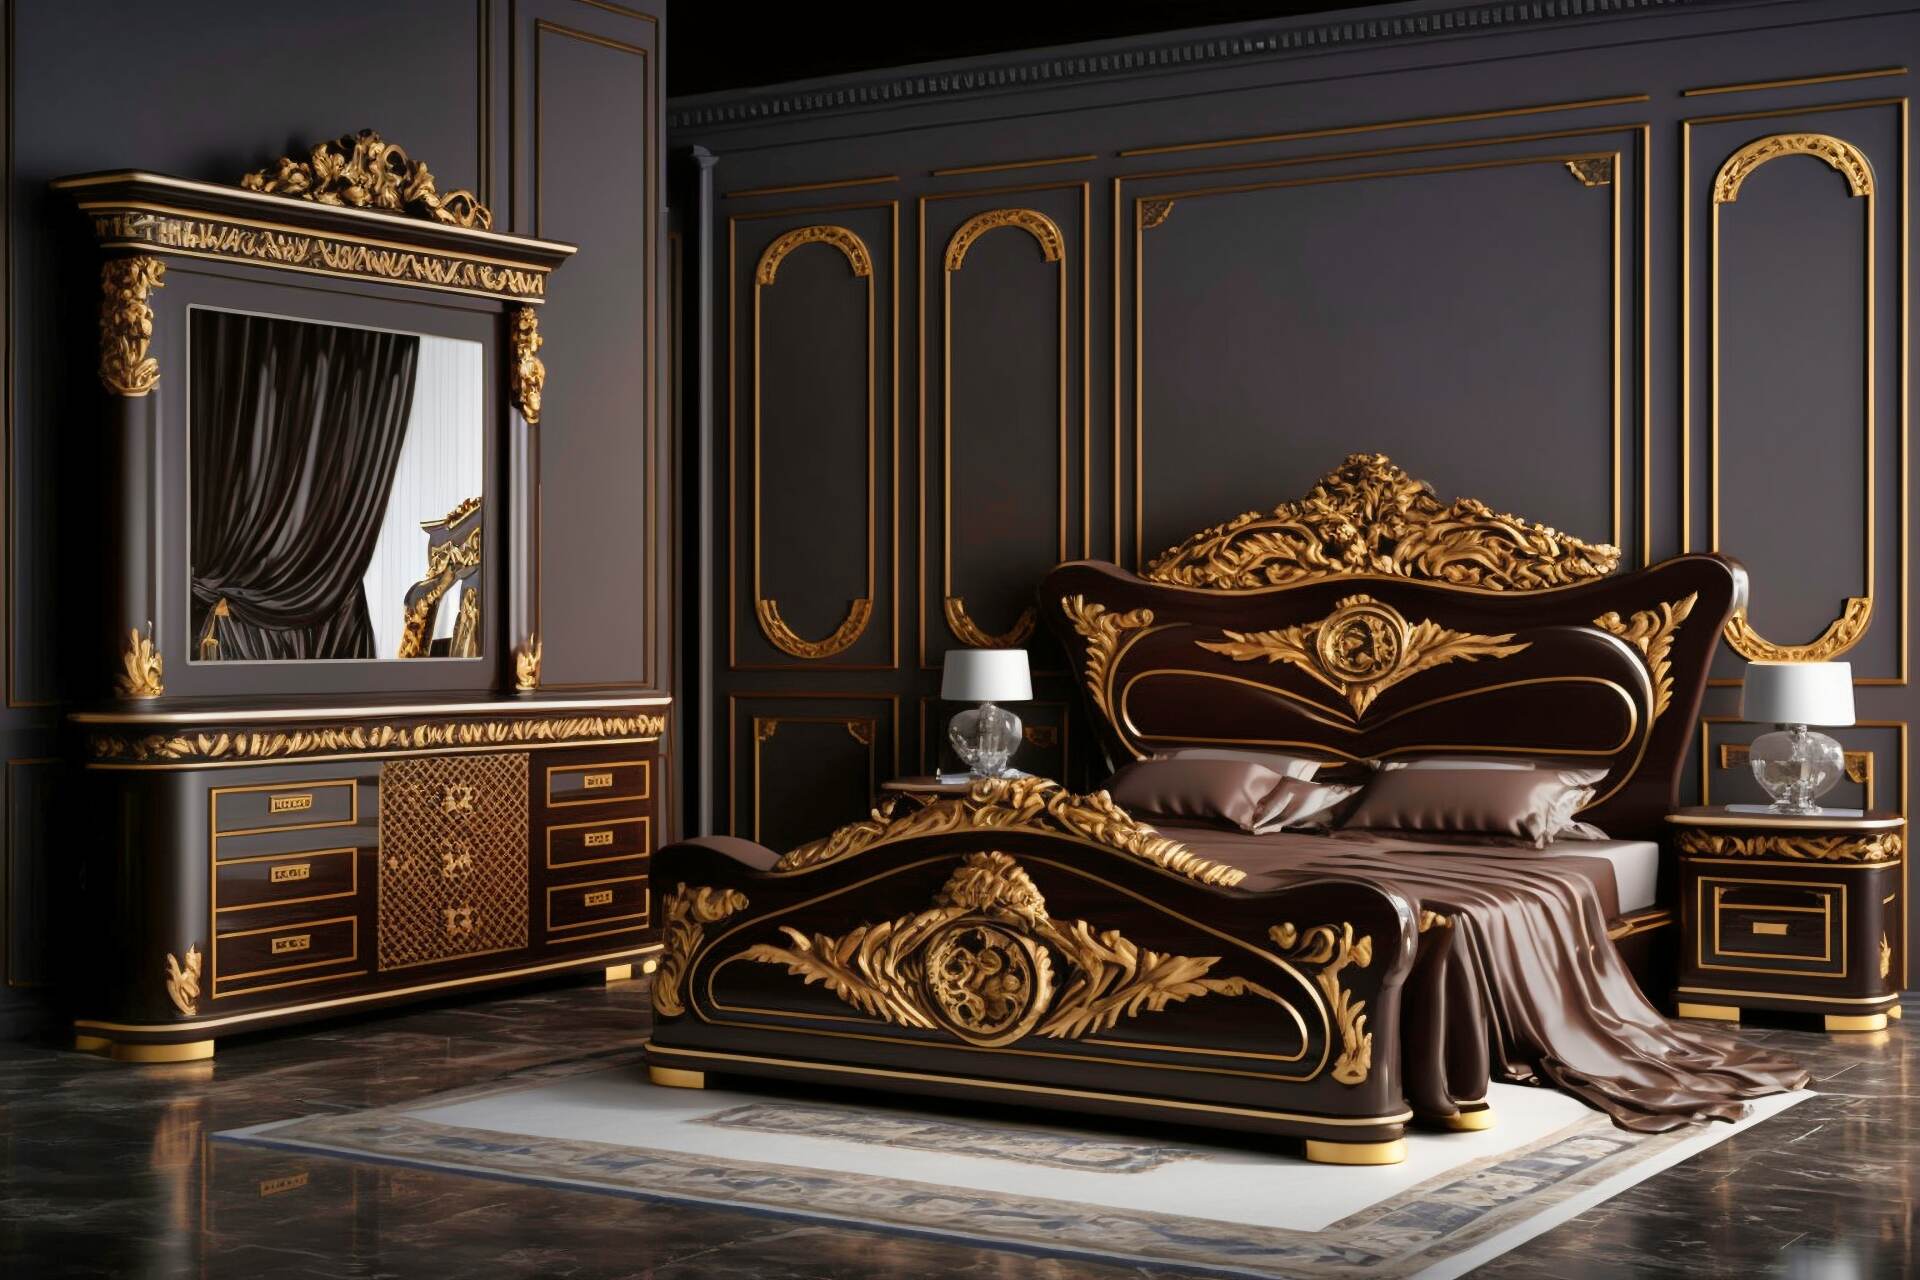 A Modern Italian Bedroom Set Of Italian Designed